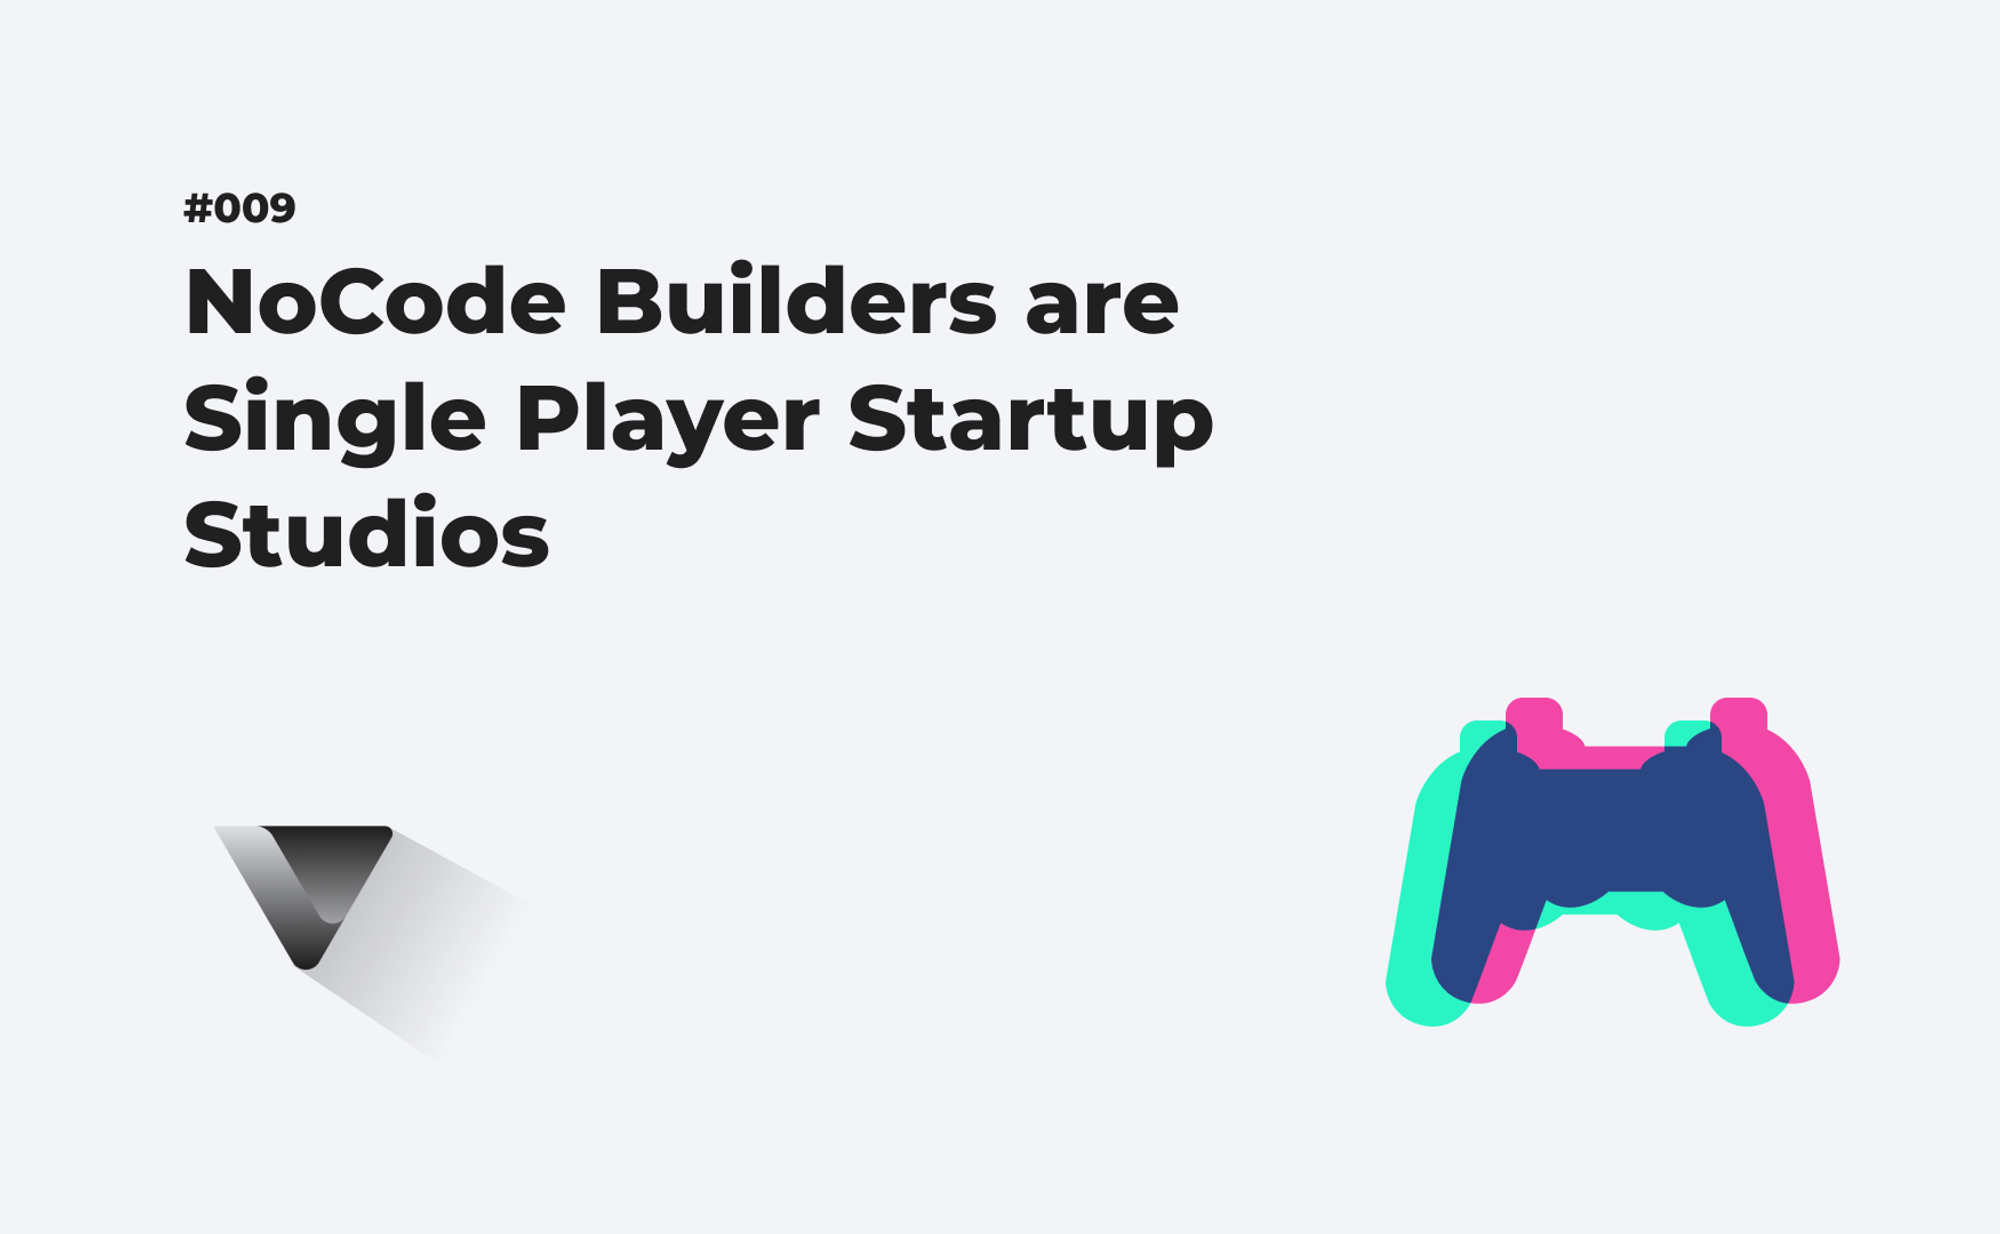 NoCode Builders are Single Player Startup Studios